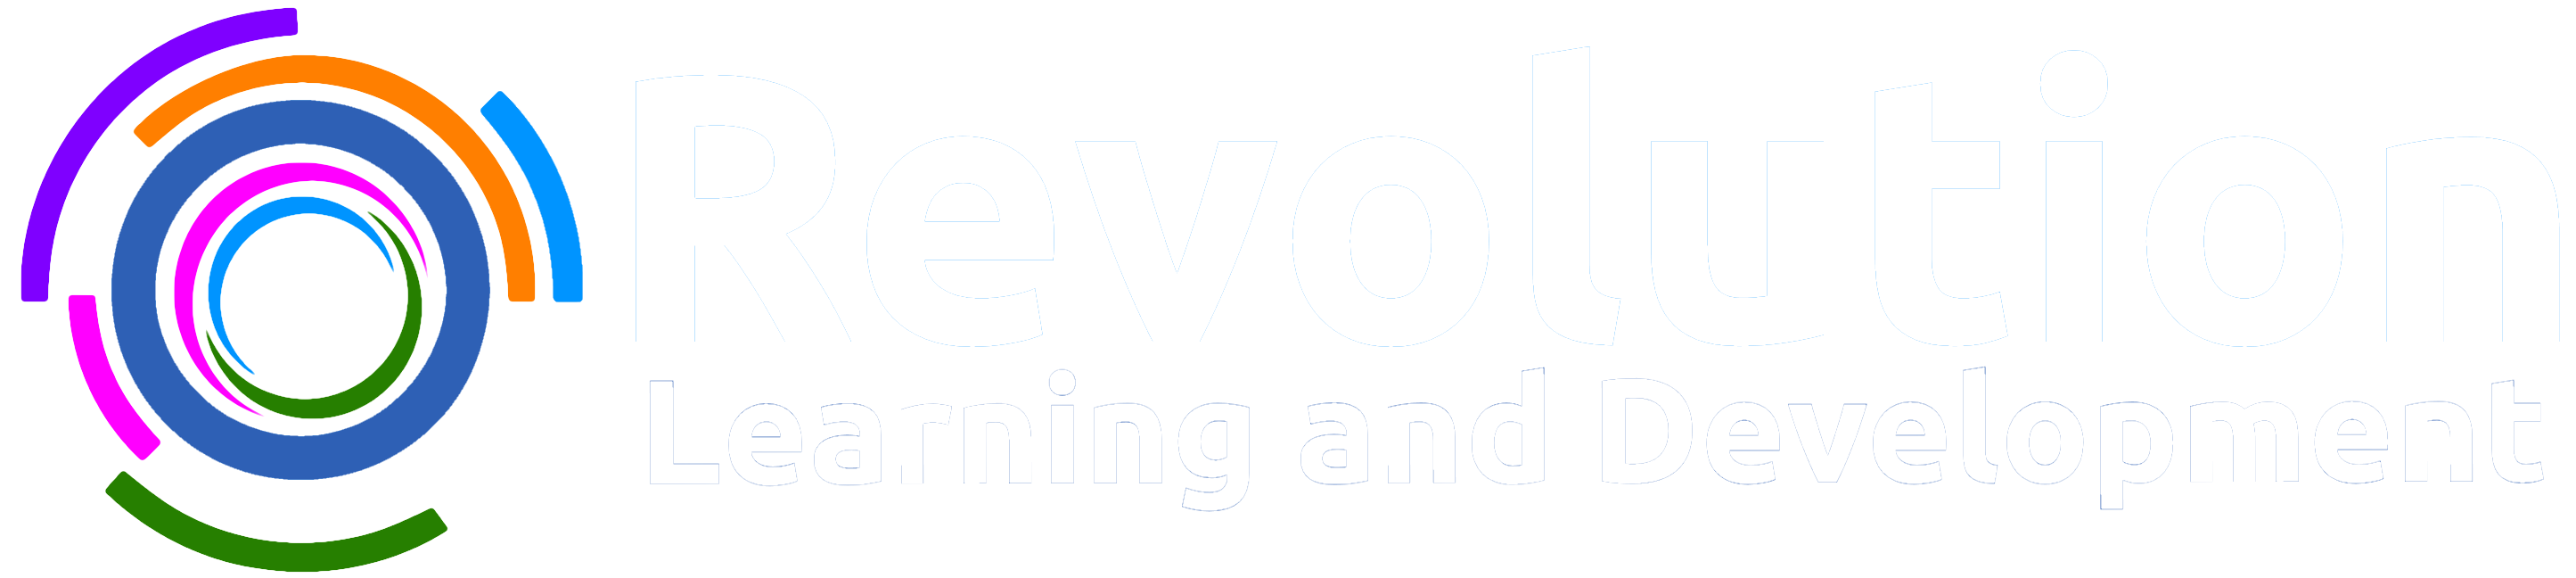 Revolution Learning and Development – Switzerland